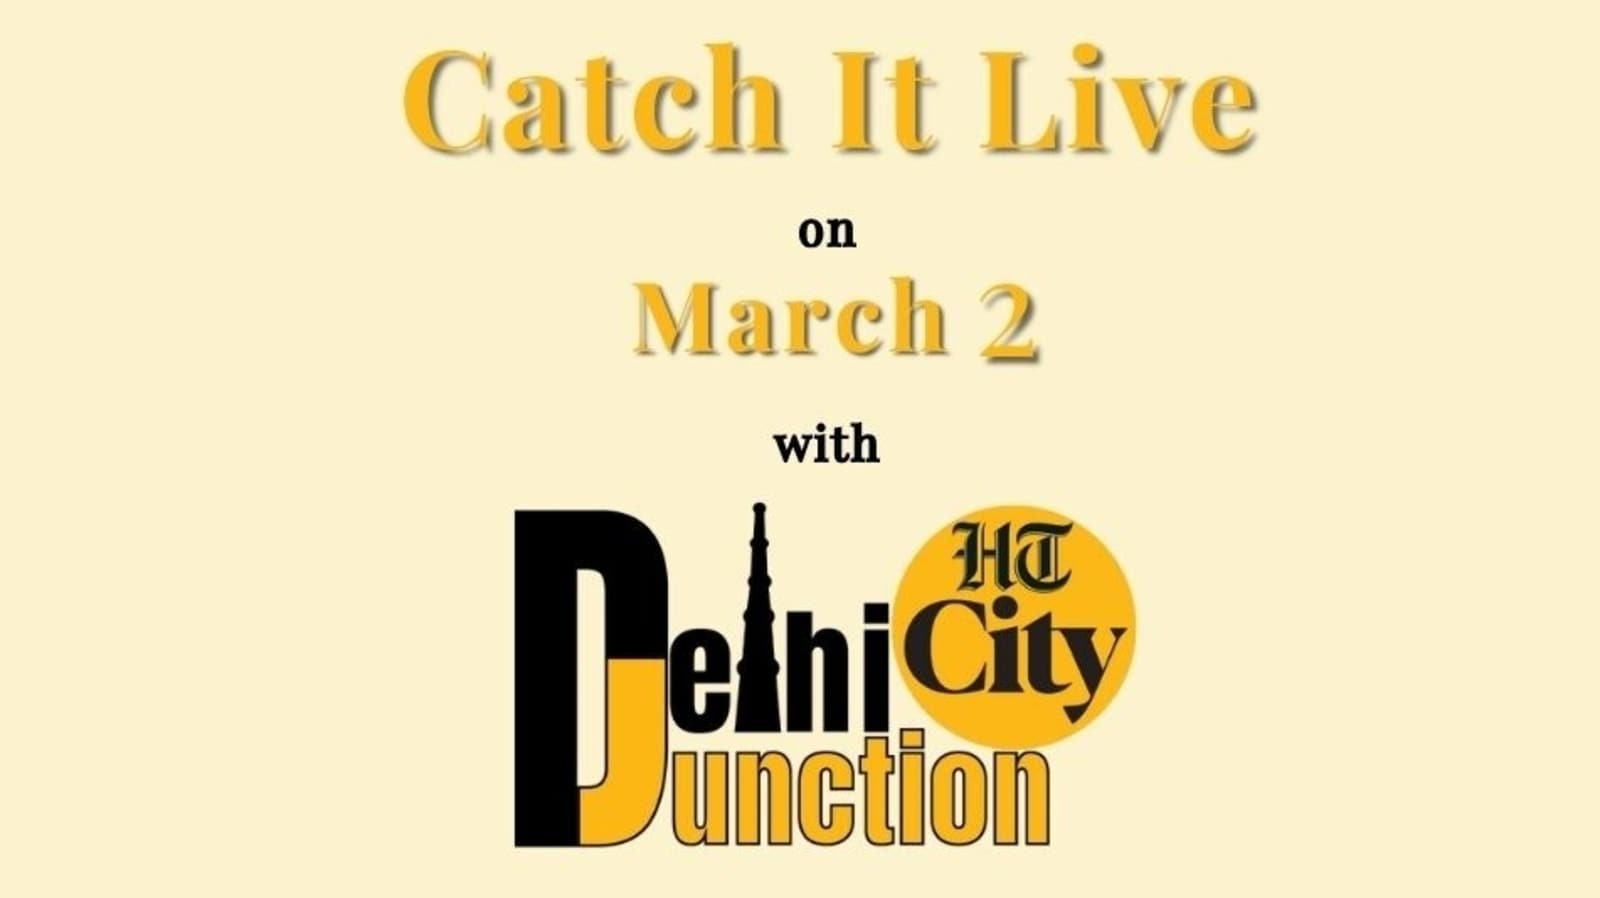 HT City Delhi Junction: Catch It Live on March 2